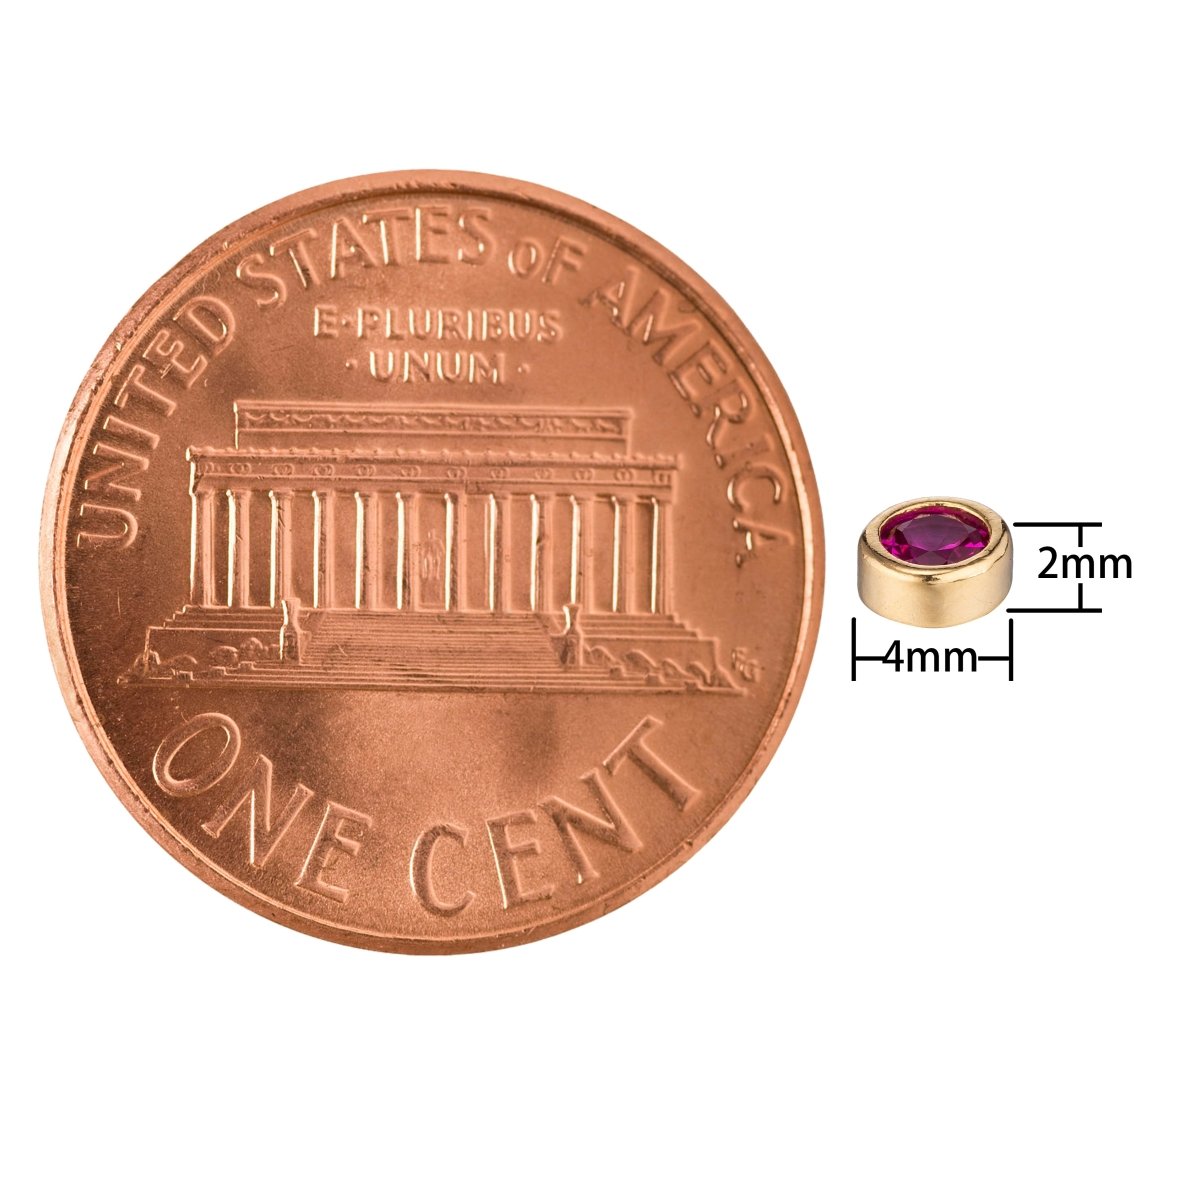 Super Tiny Golden Ring with Purple Crystal Charm CZ Mini Geometric Gold Filled Charm Pendant C-391 - DLUXCA